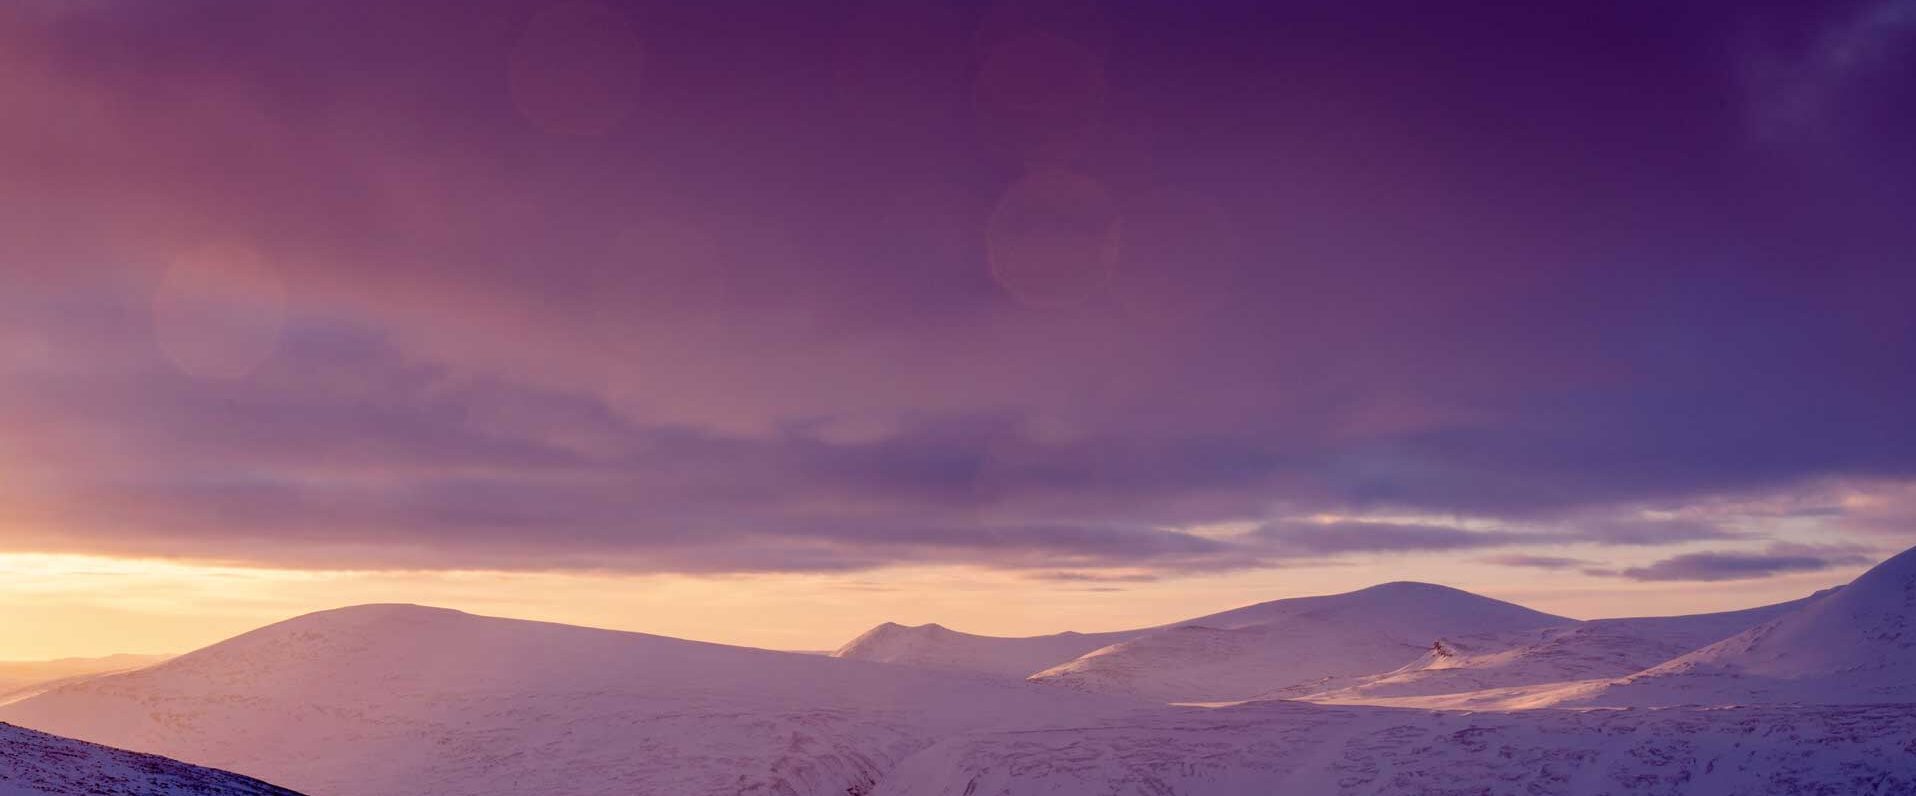 Mountain landscape purple